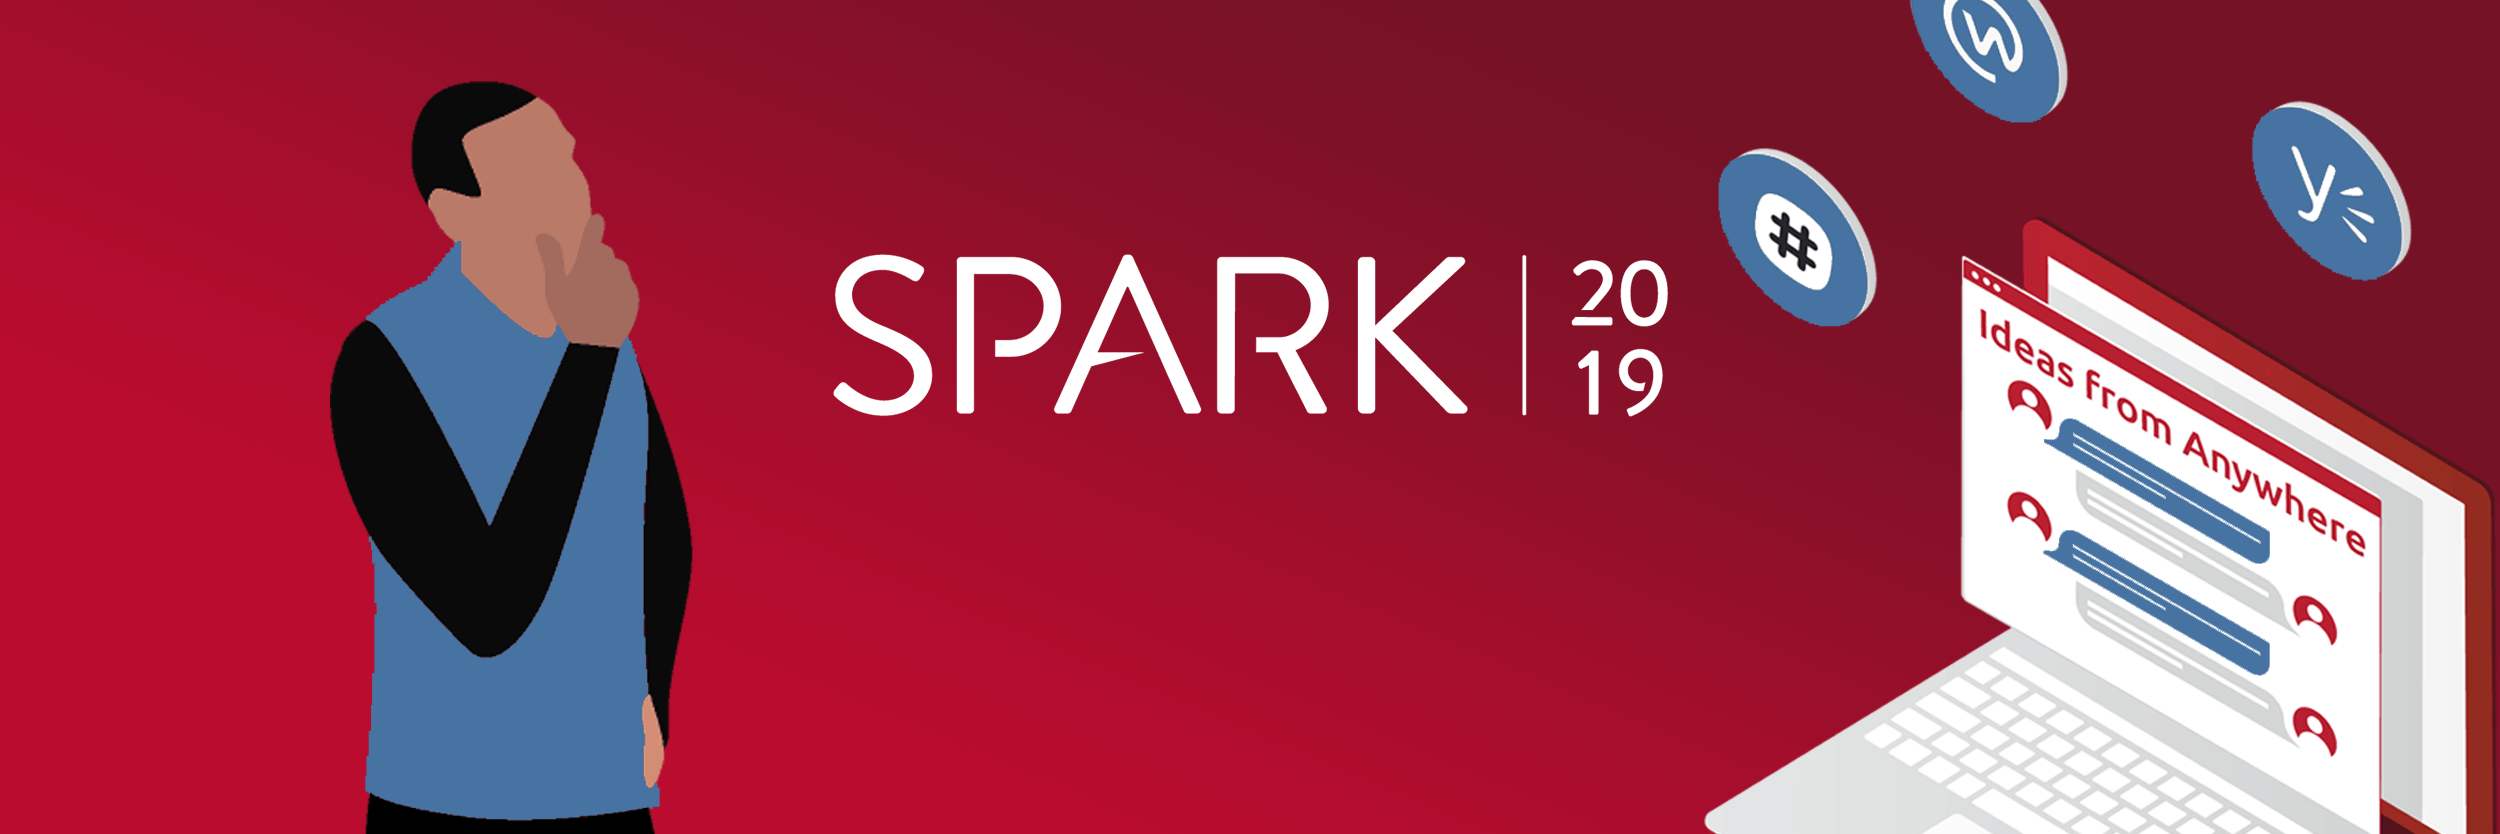 SPARK 2019 | Mencap: How we started a new conversation